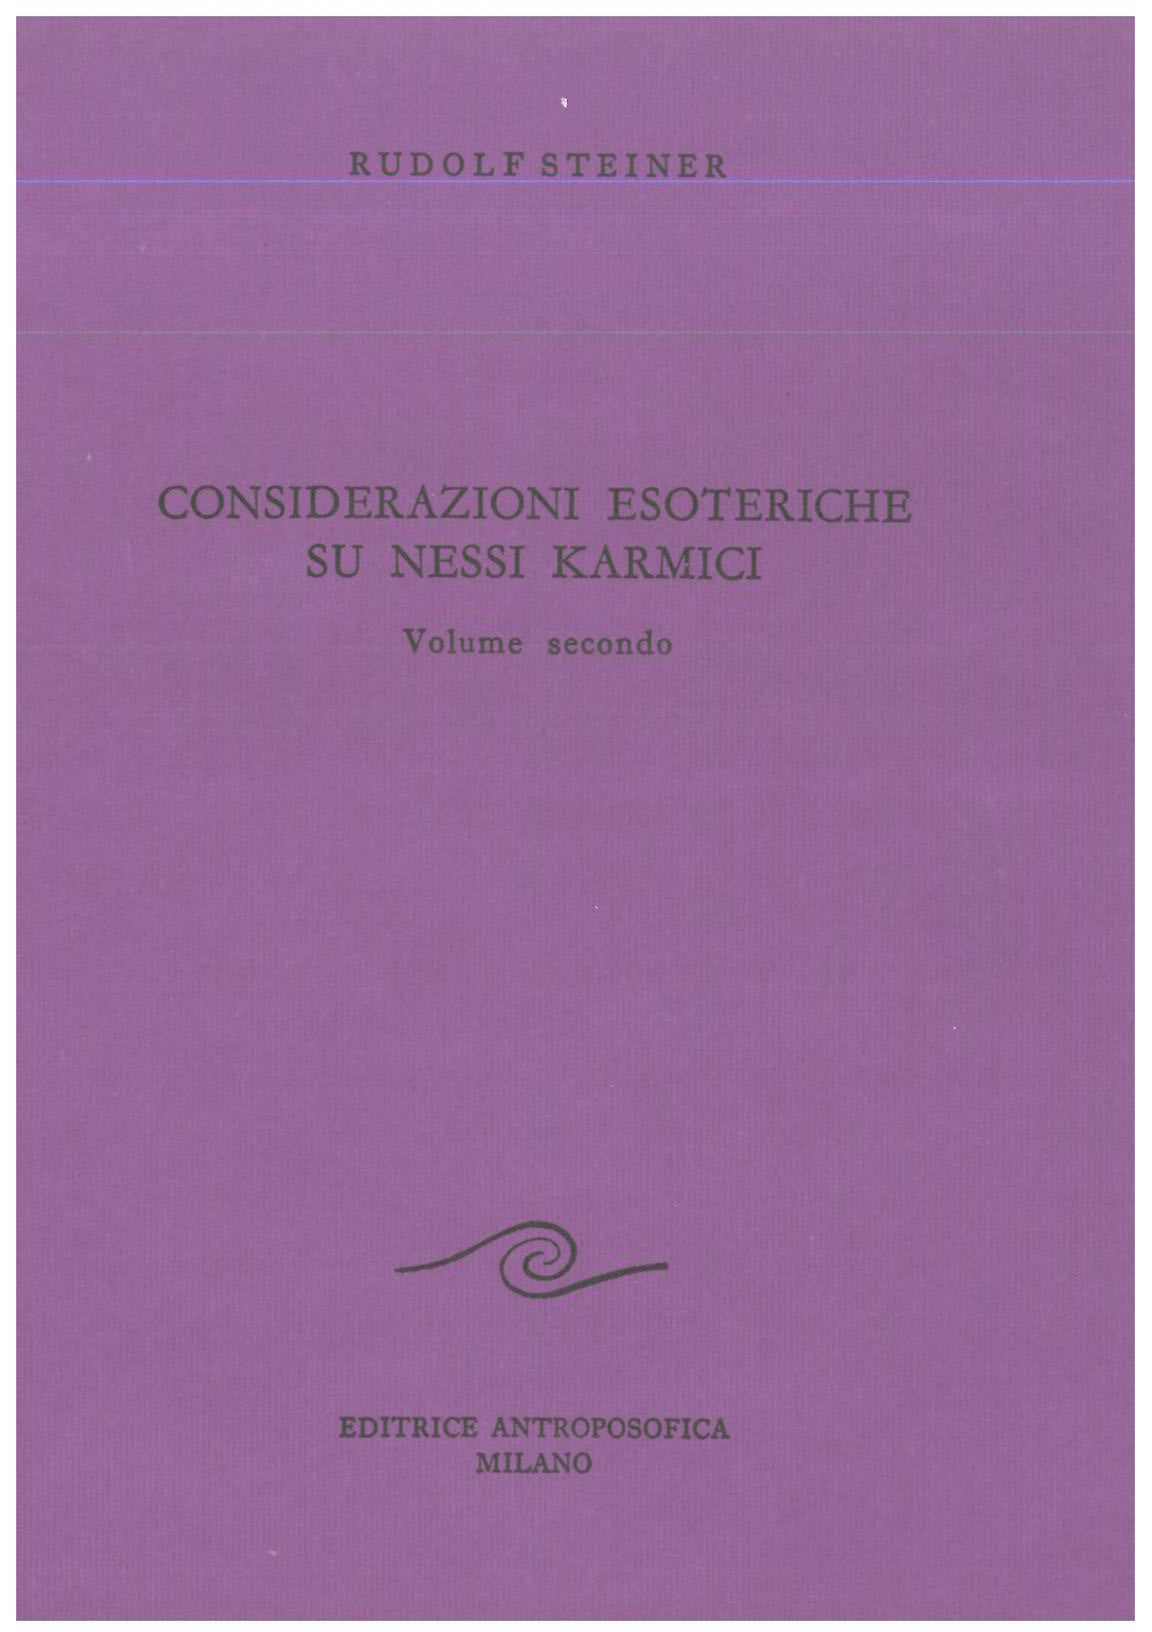 Considerazioni esoteriche su nessi karmici vol.2 - Rudolf Steiner